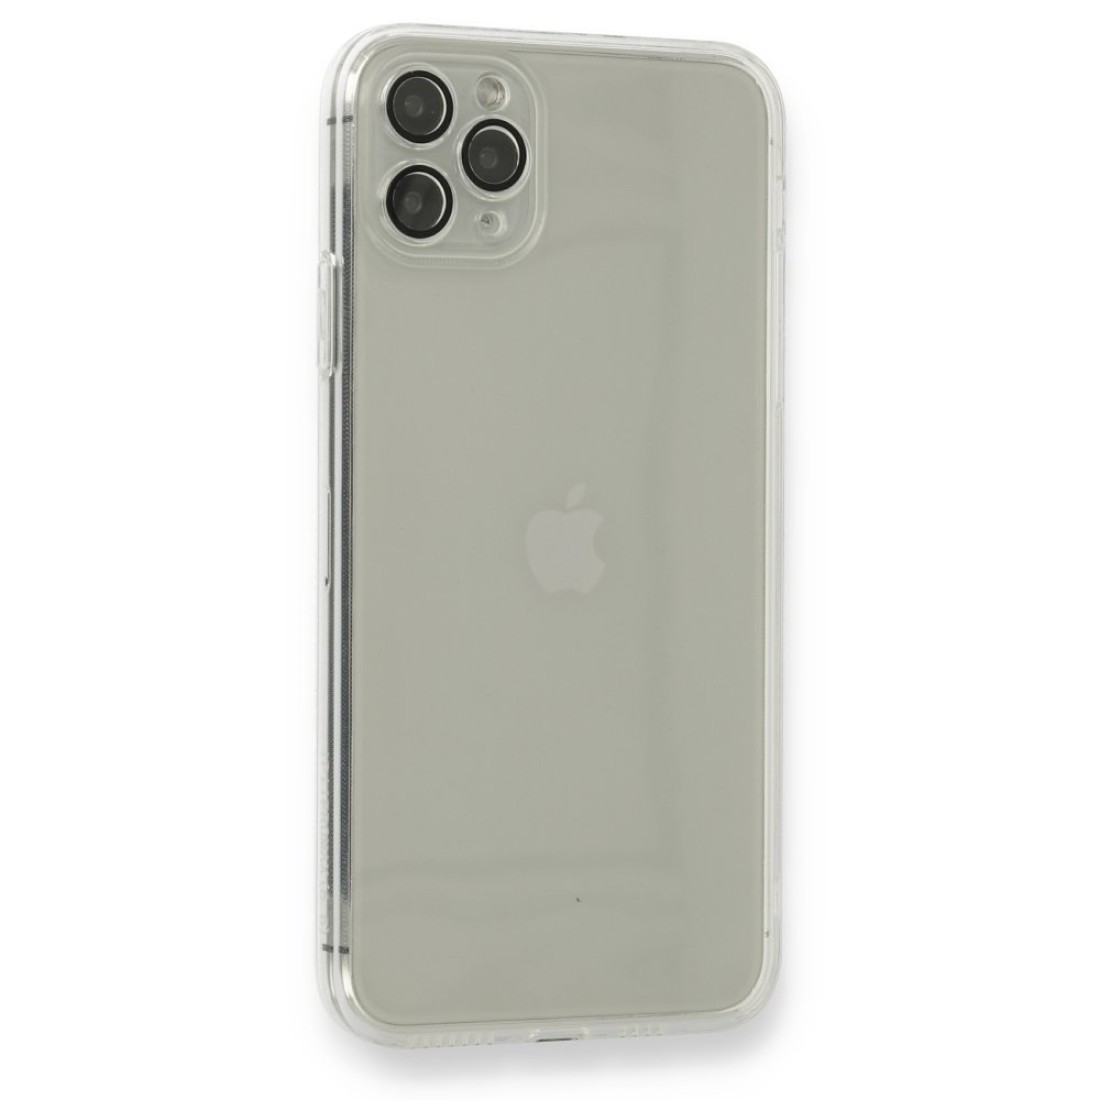 Apple iPhone 11 Pro Max Kılıf Fly Lens Silikon - Şeffaf